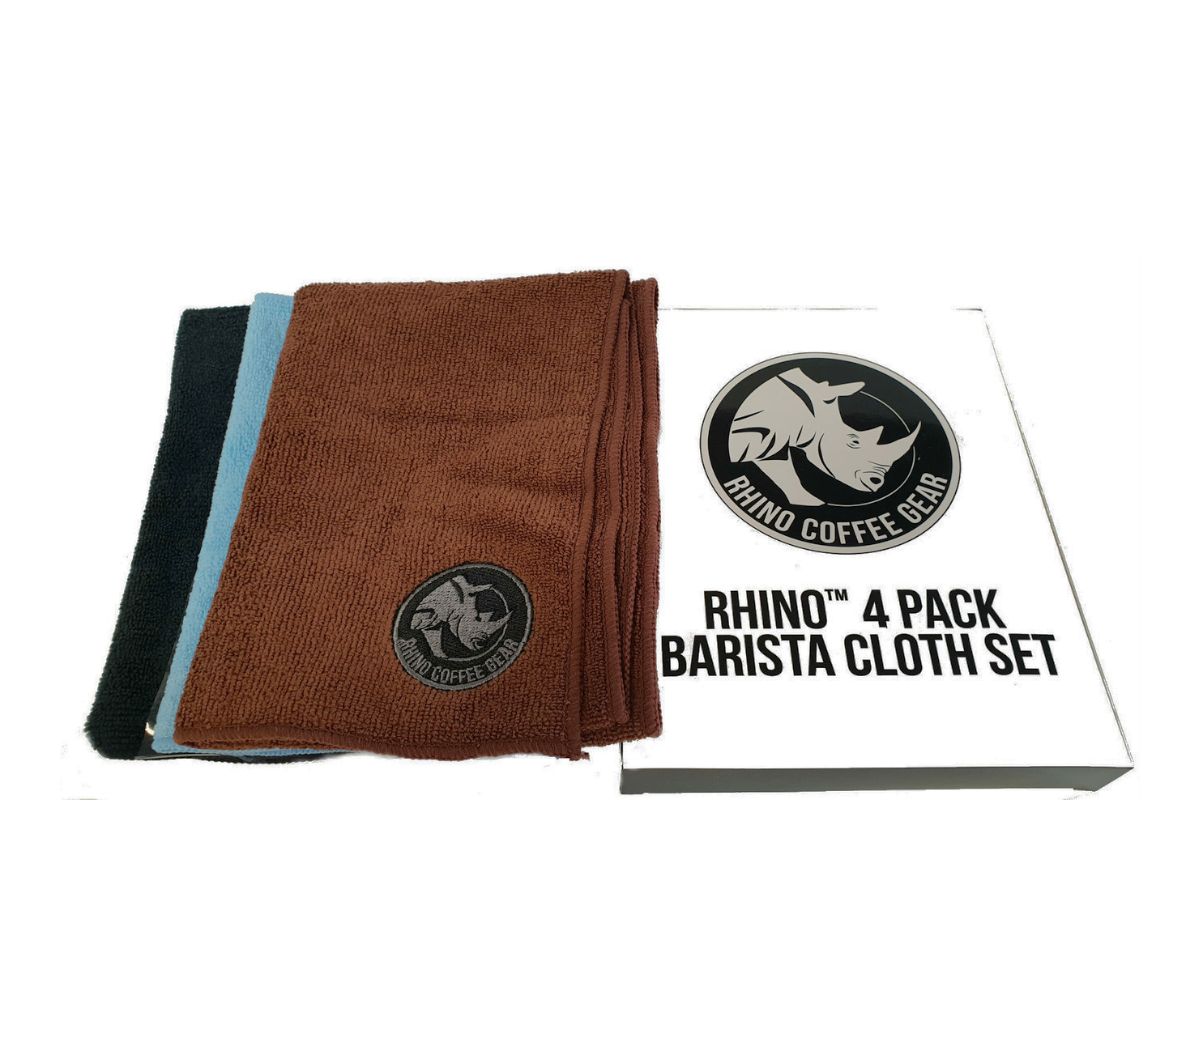 Rhinowares Barista Cloth Towel Set – Shop Coffee